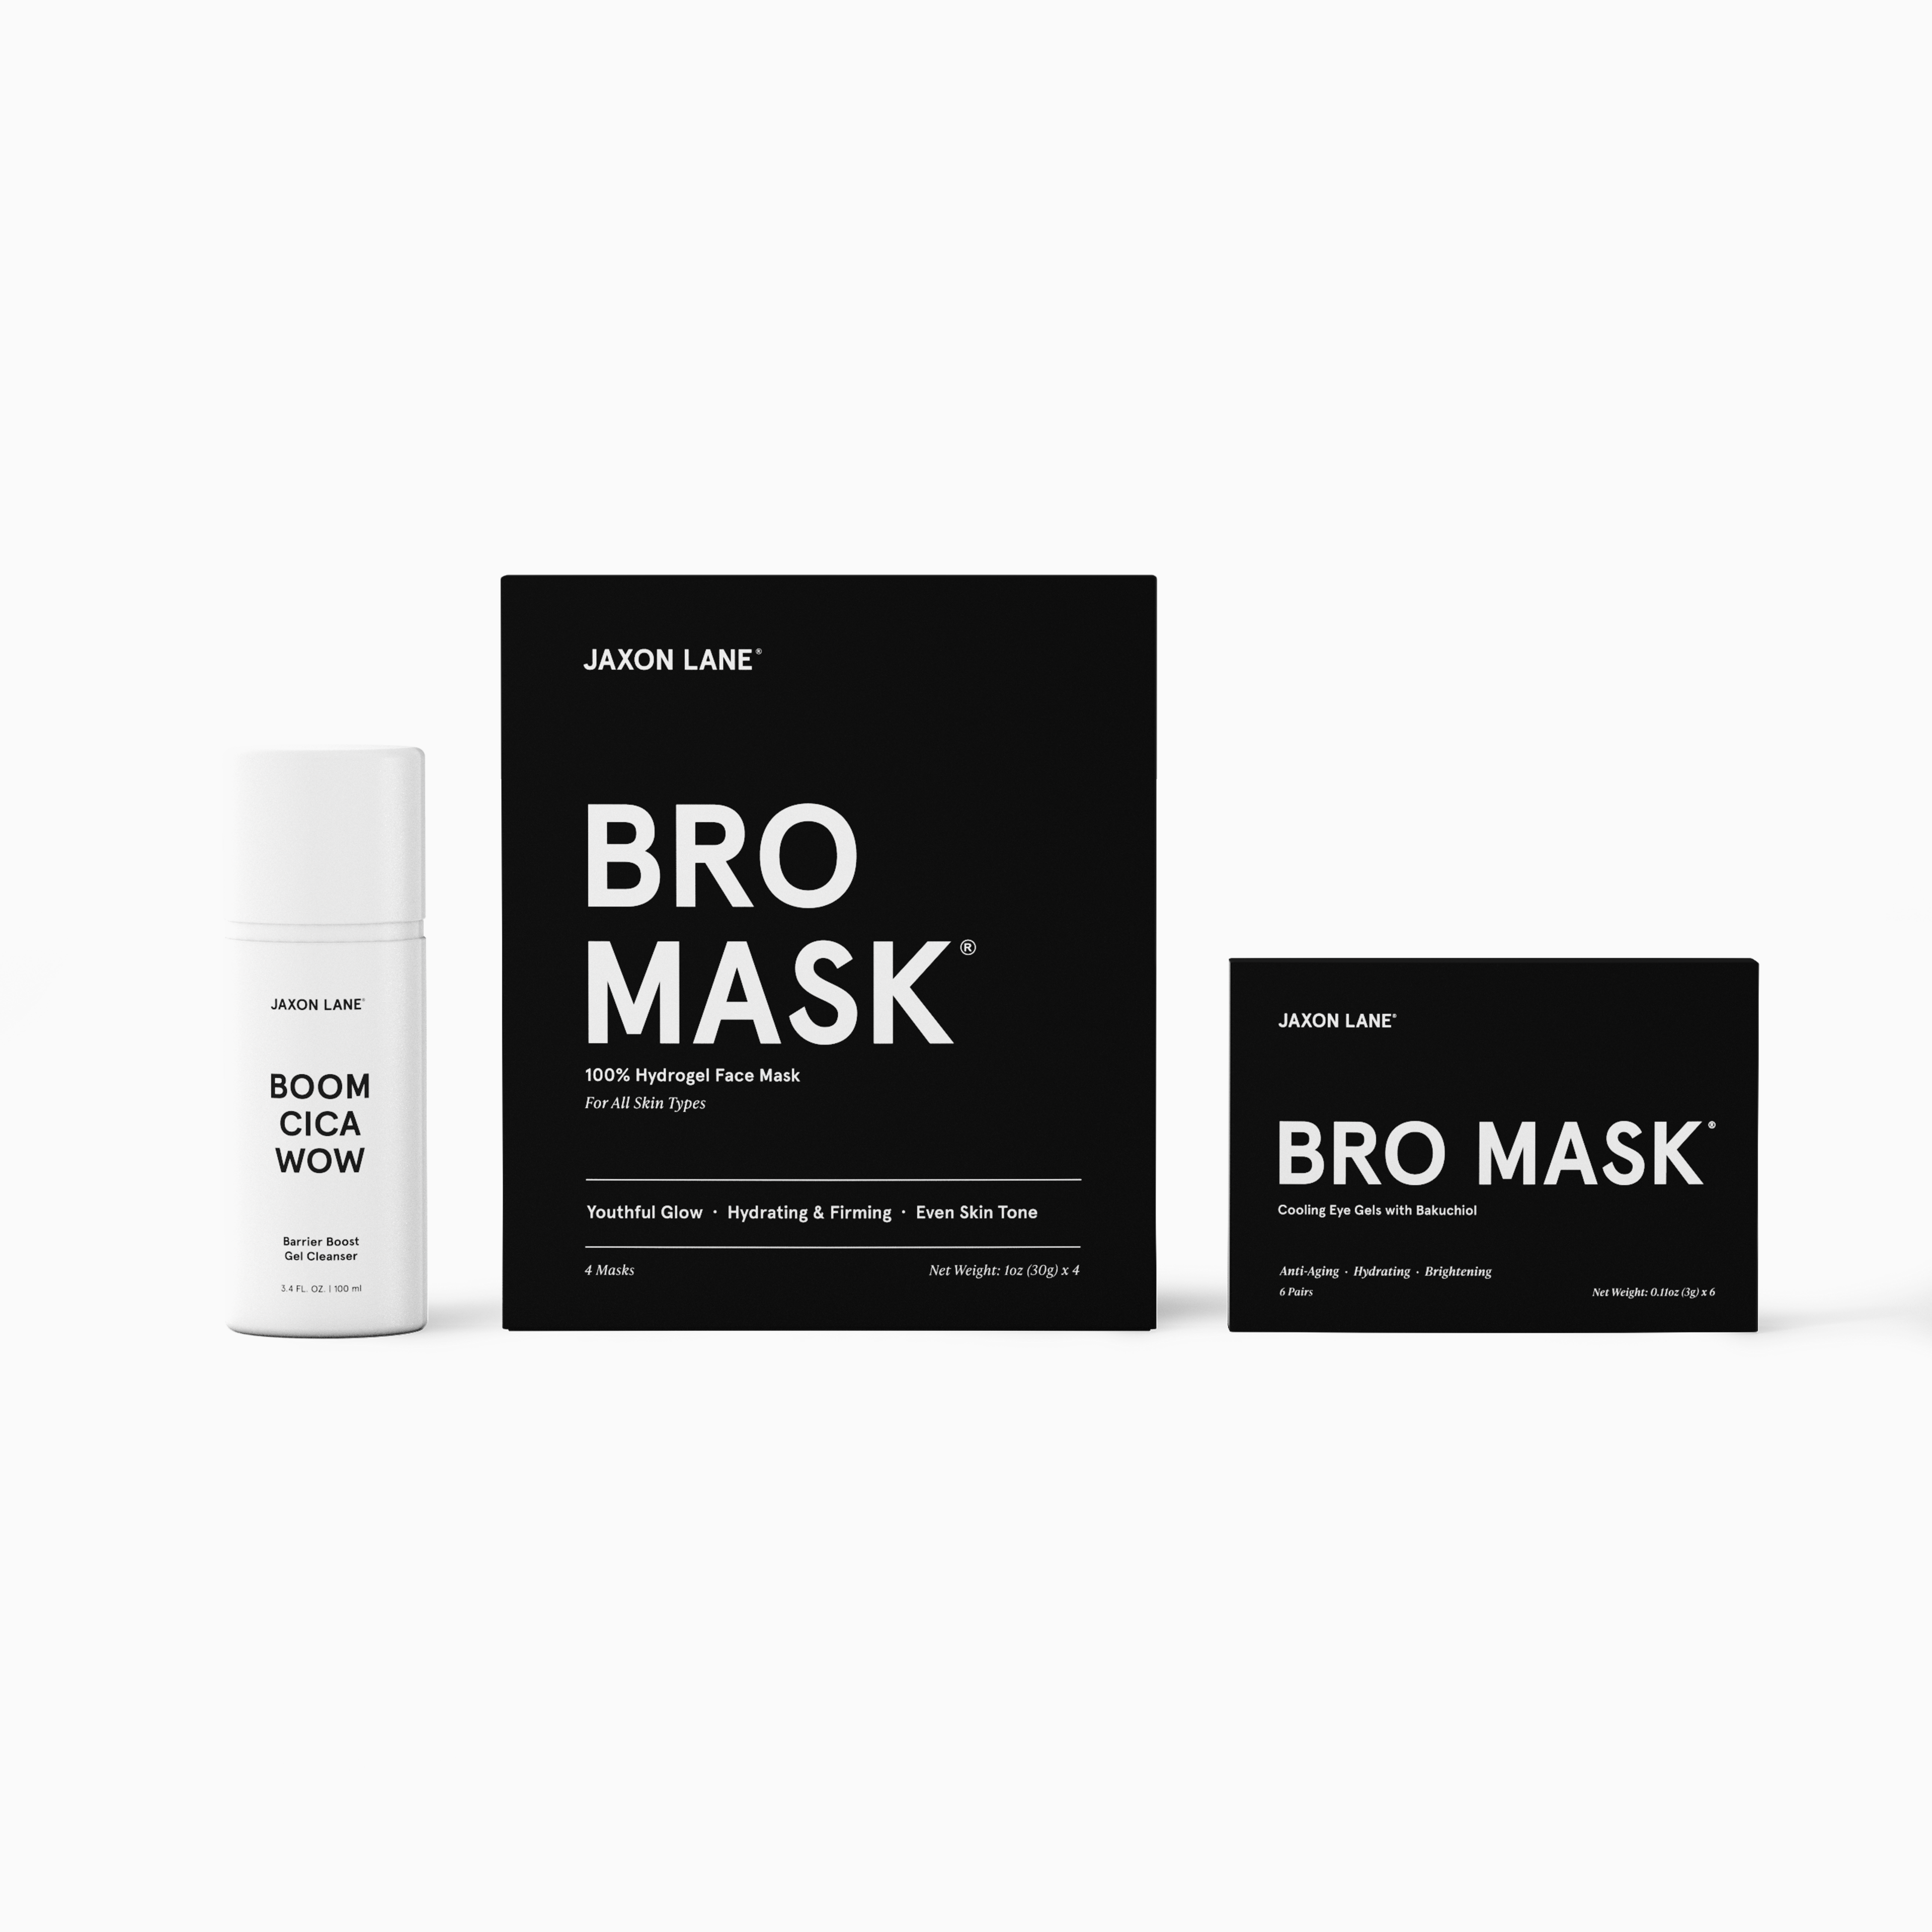 Bro Mask Facial Set - Ready, Set, Glow Gift Box